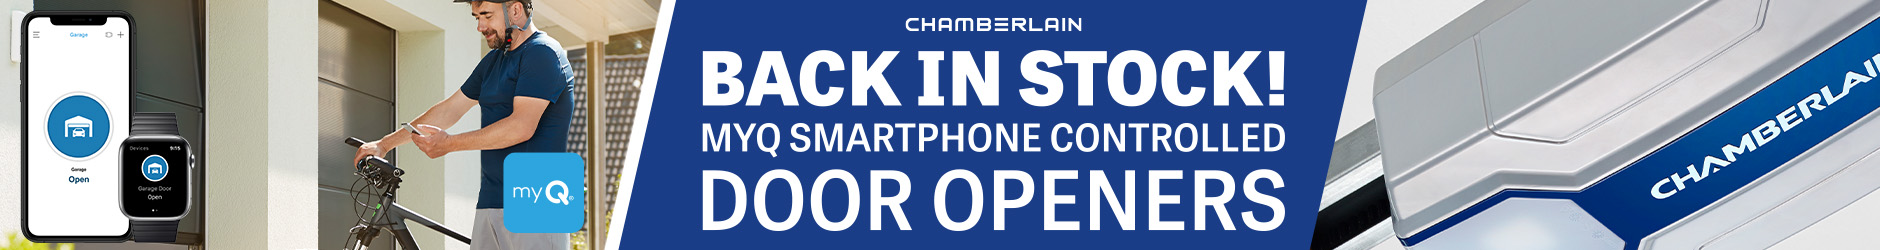 Chamberlain Back In Stock! myQ Smartphone Controlled Garage Door Openers